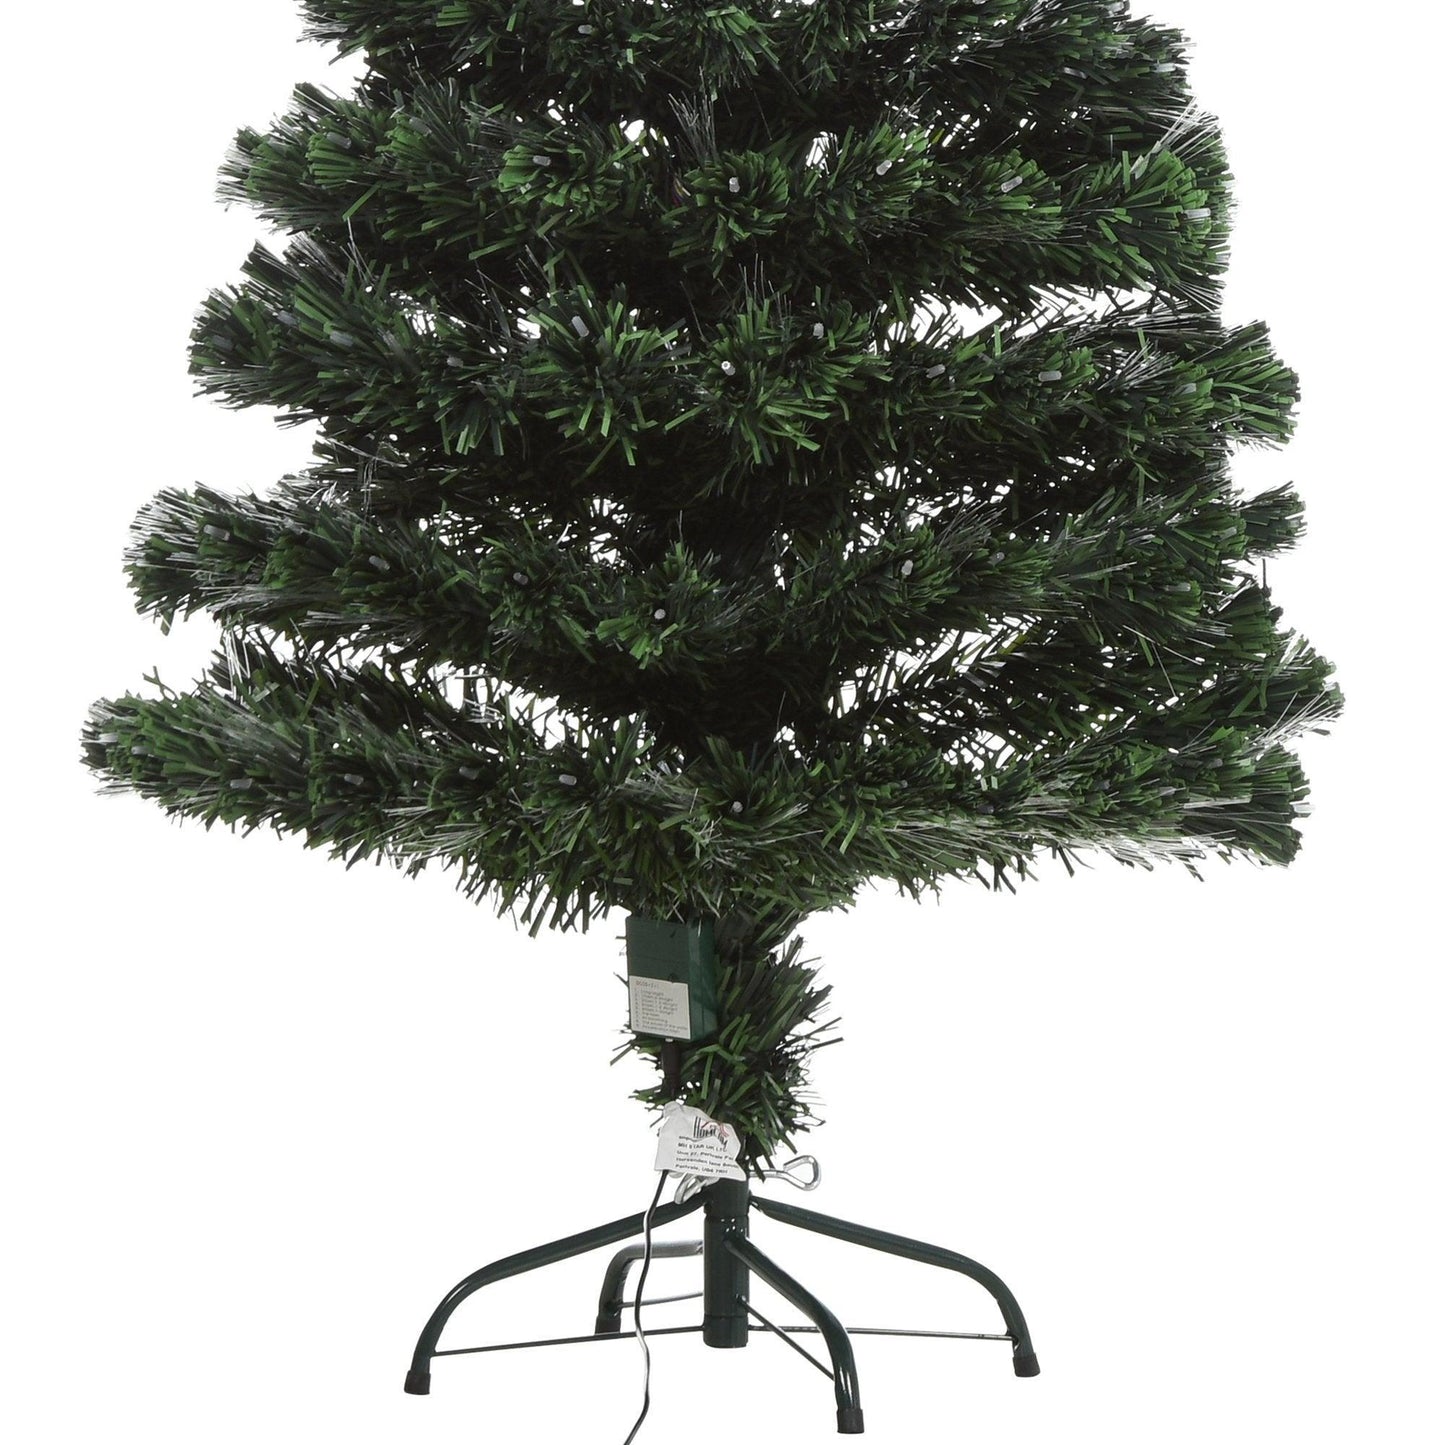 HOMCOM 5ft Pre-Lit Fiber Optic Christmas Tree with LED Lights - ALL4U RETAILER LTD